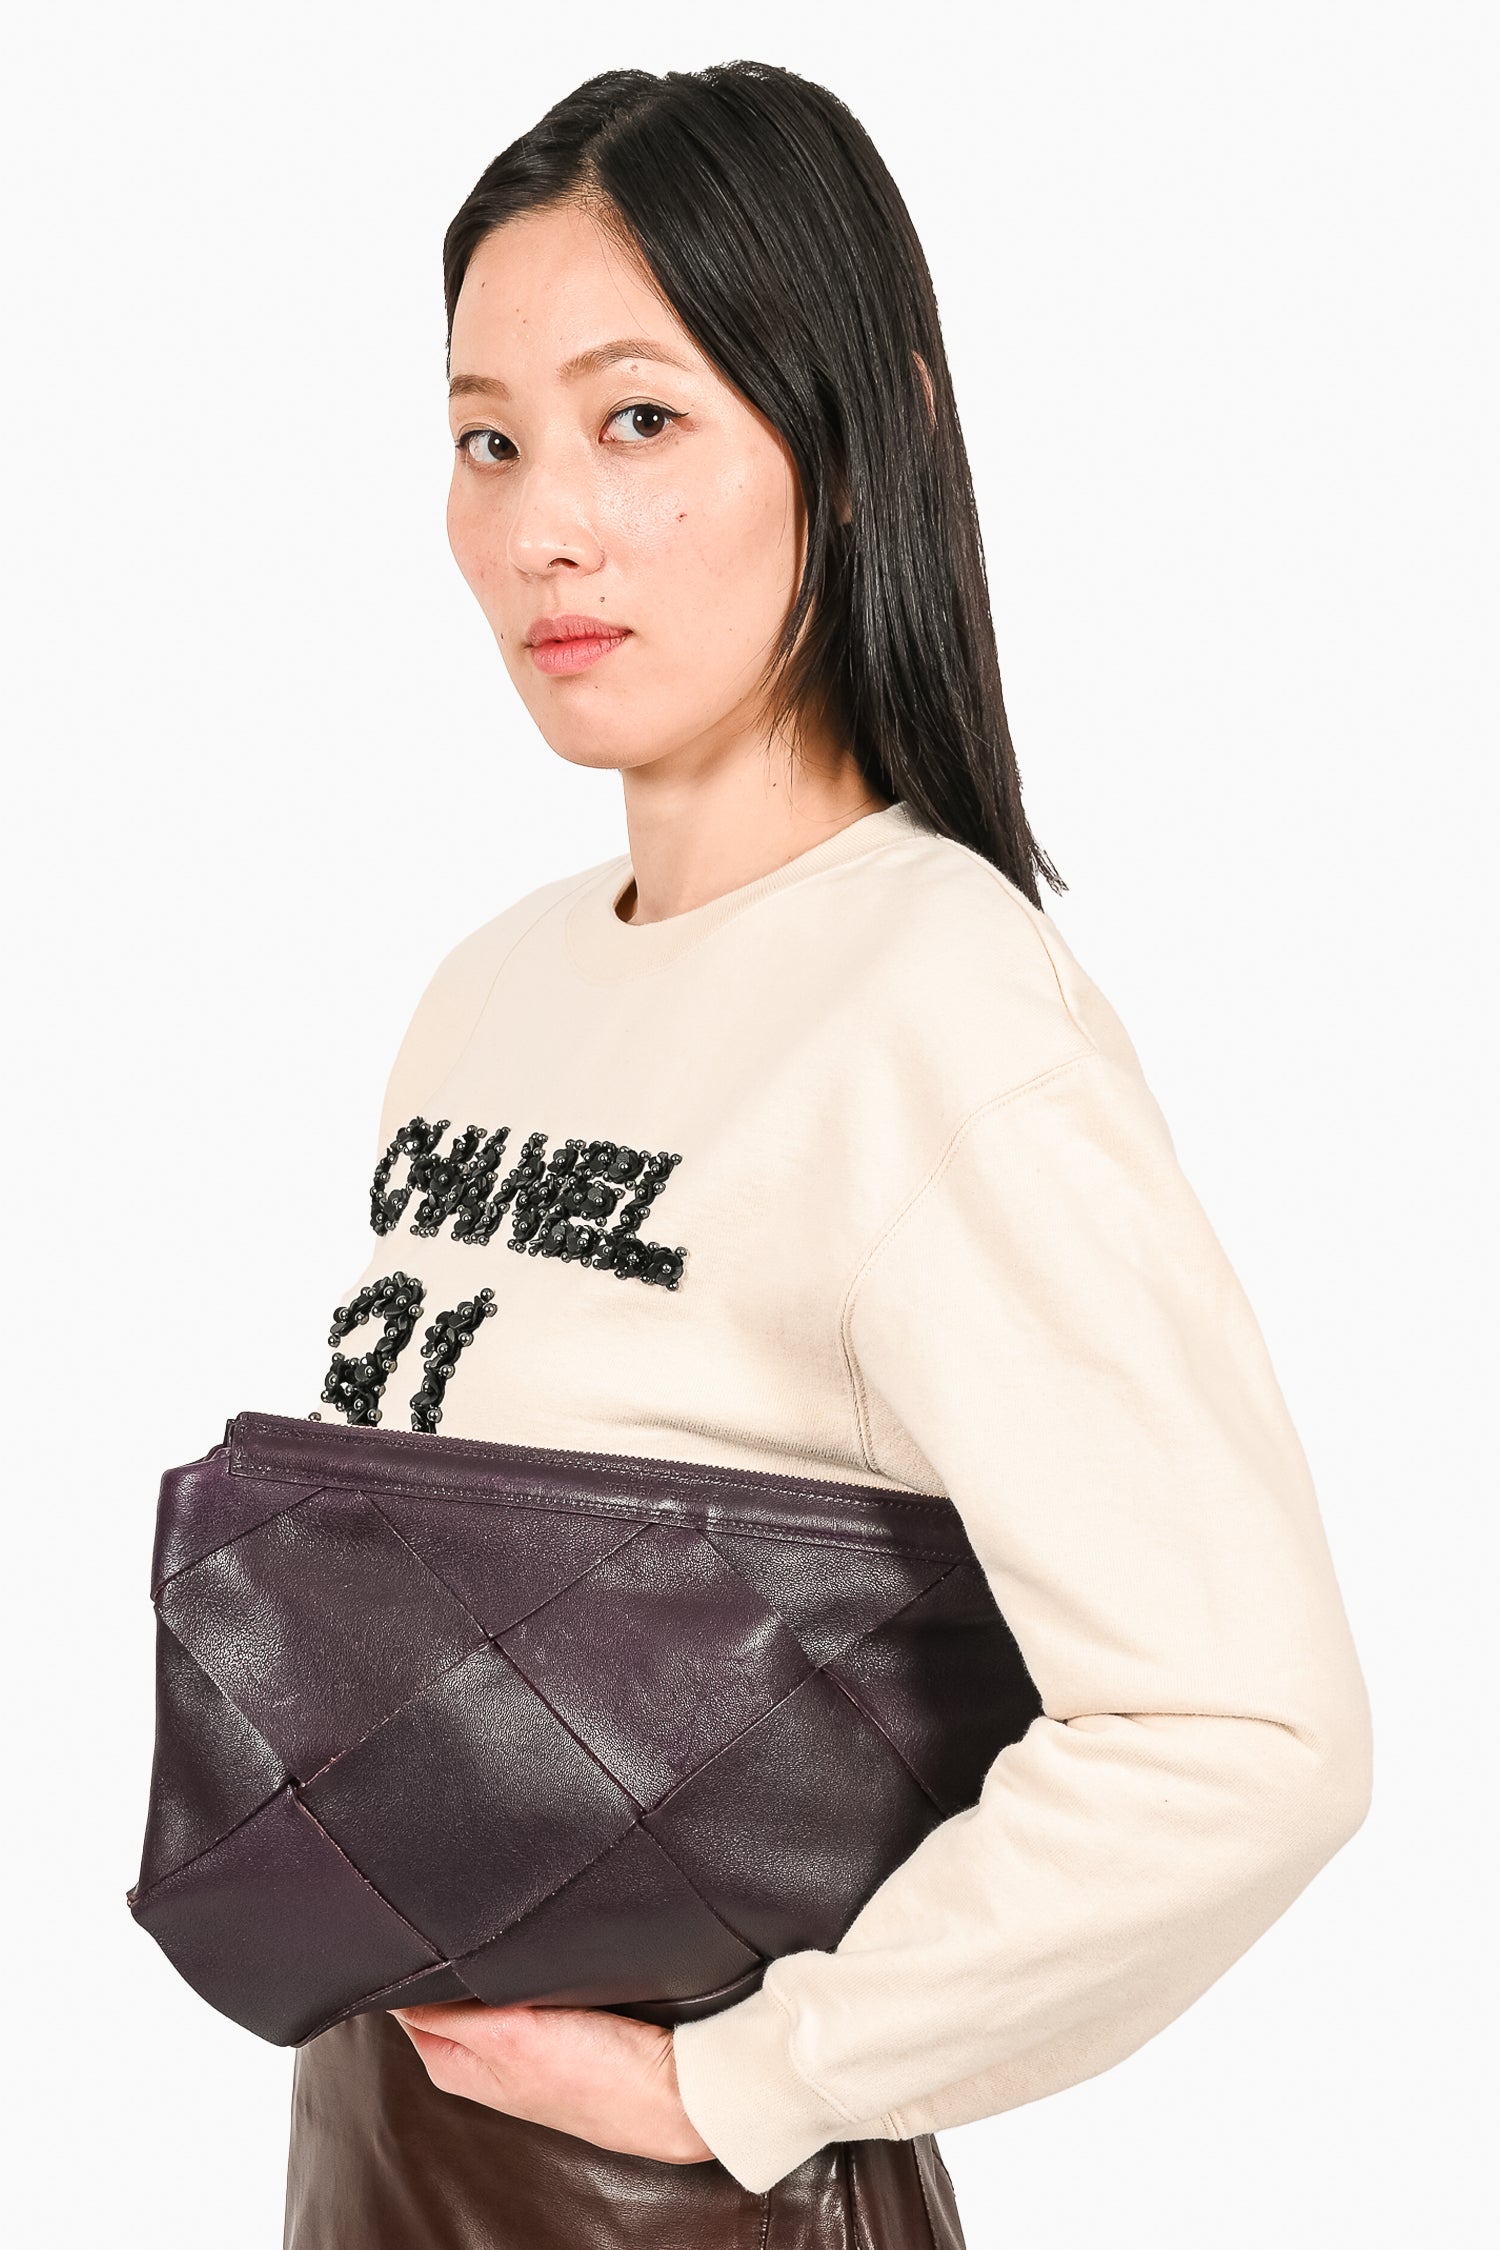 Purple Bottega Veneta Intrecciato The Mini Pouch Crossoutdoor Bag, EverlastsidingShops Revival